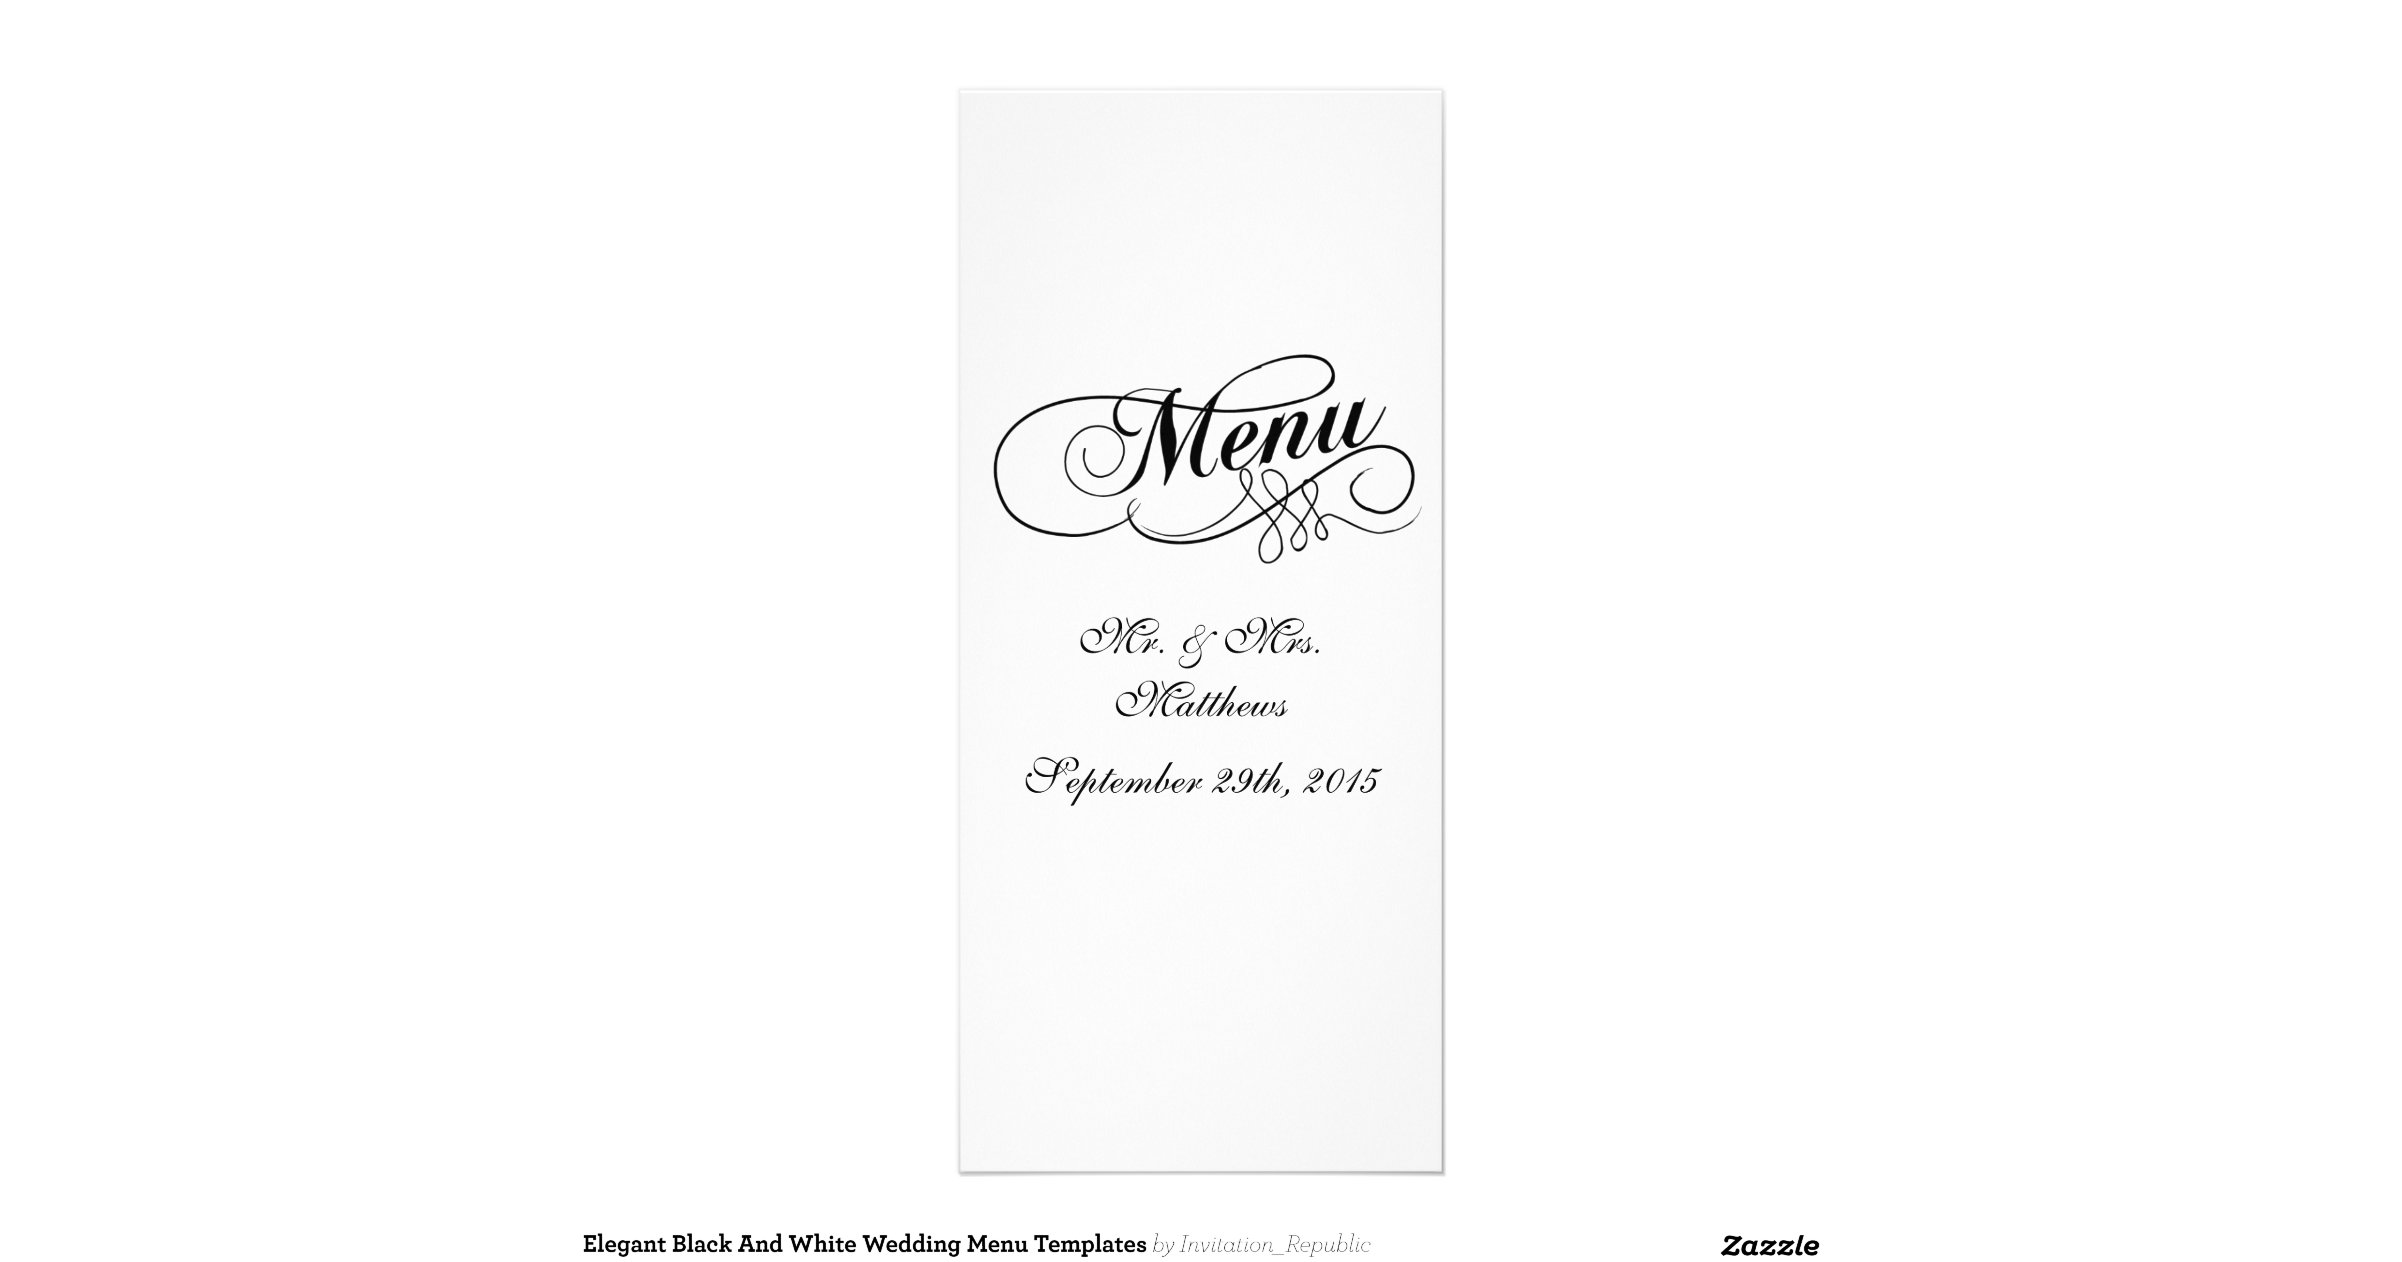 elegant_black_and_white_wedding_menu_templates_rack_card_design ...